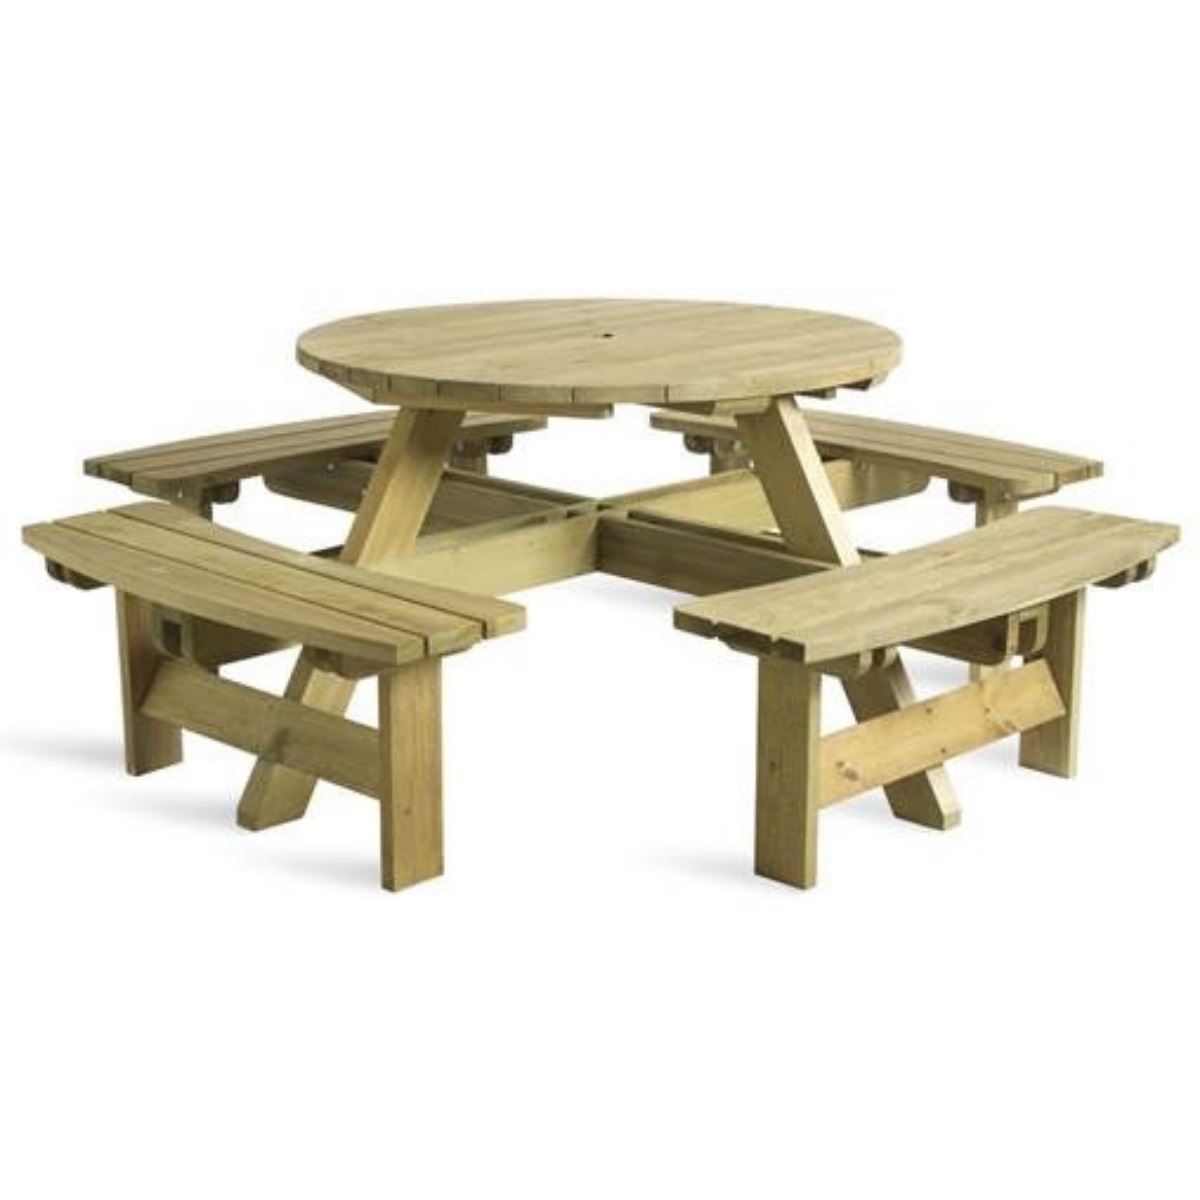 A circular wooden picnic table with easy to access bench seats, no bar to climb over